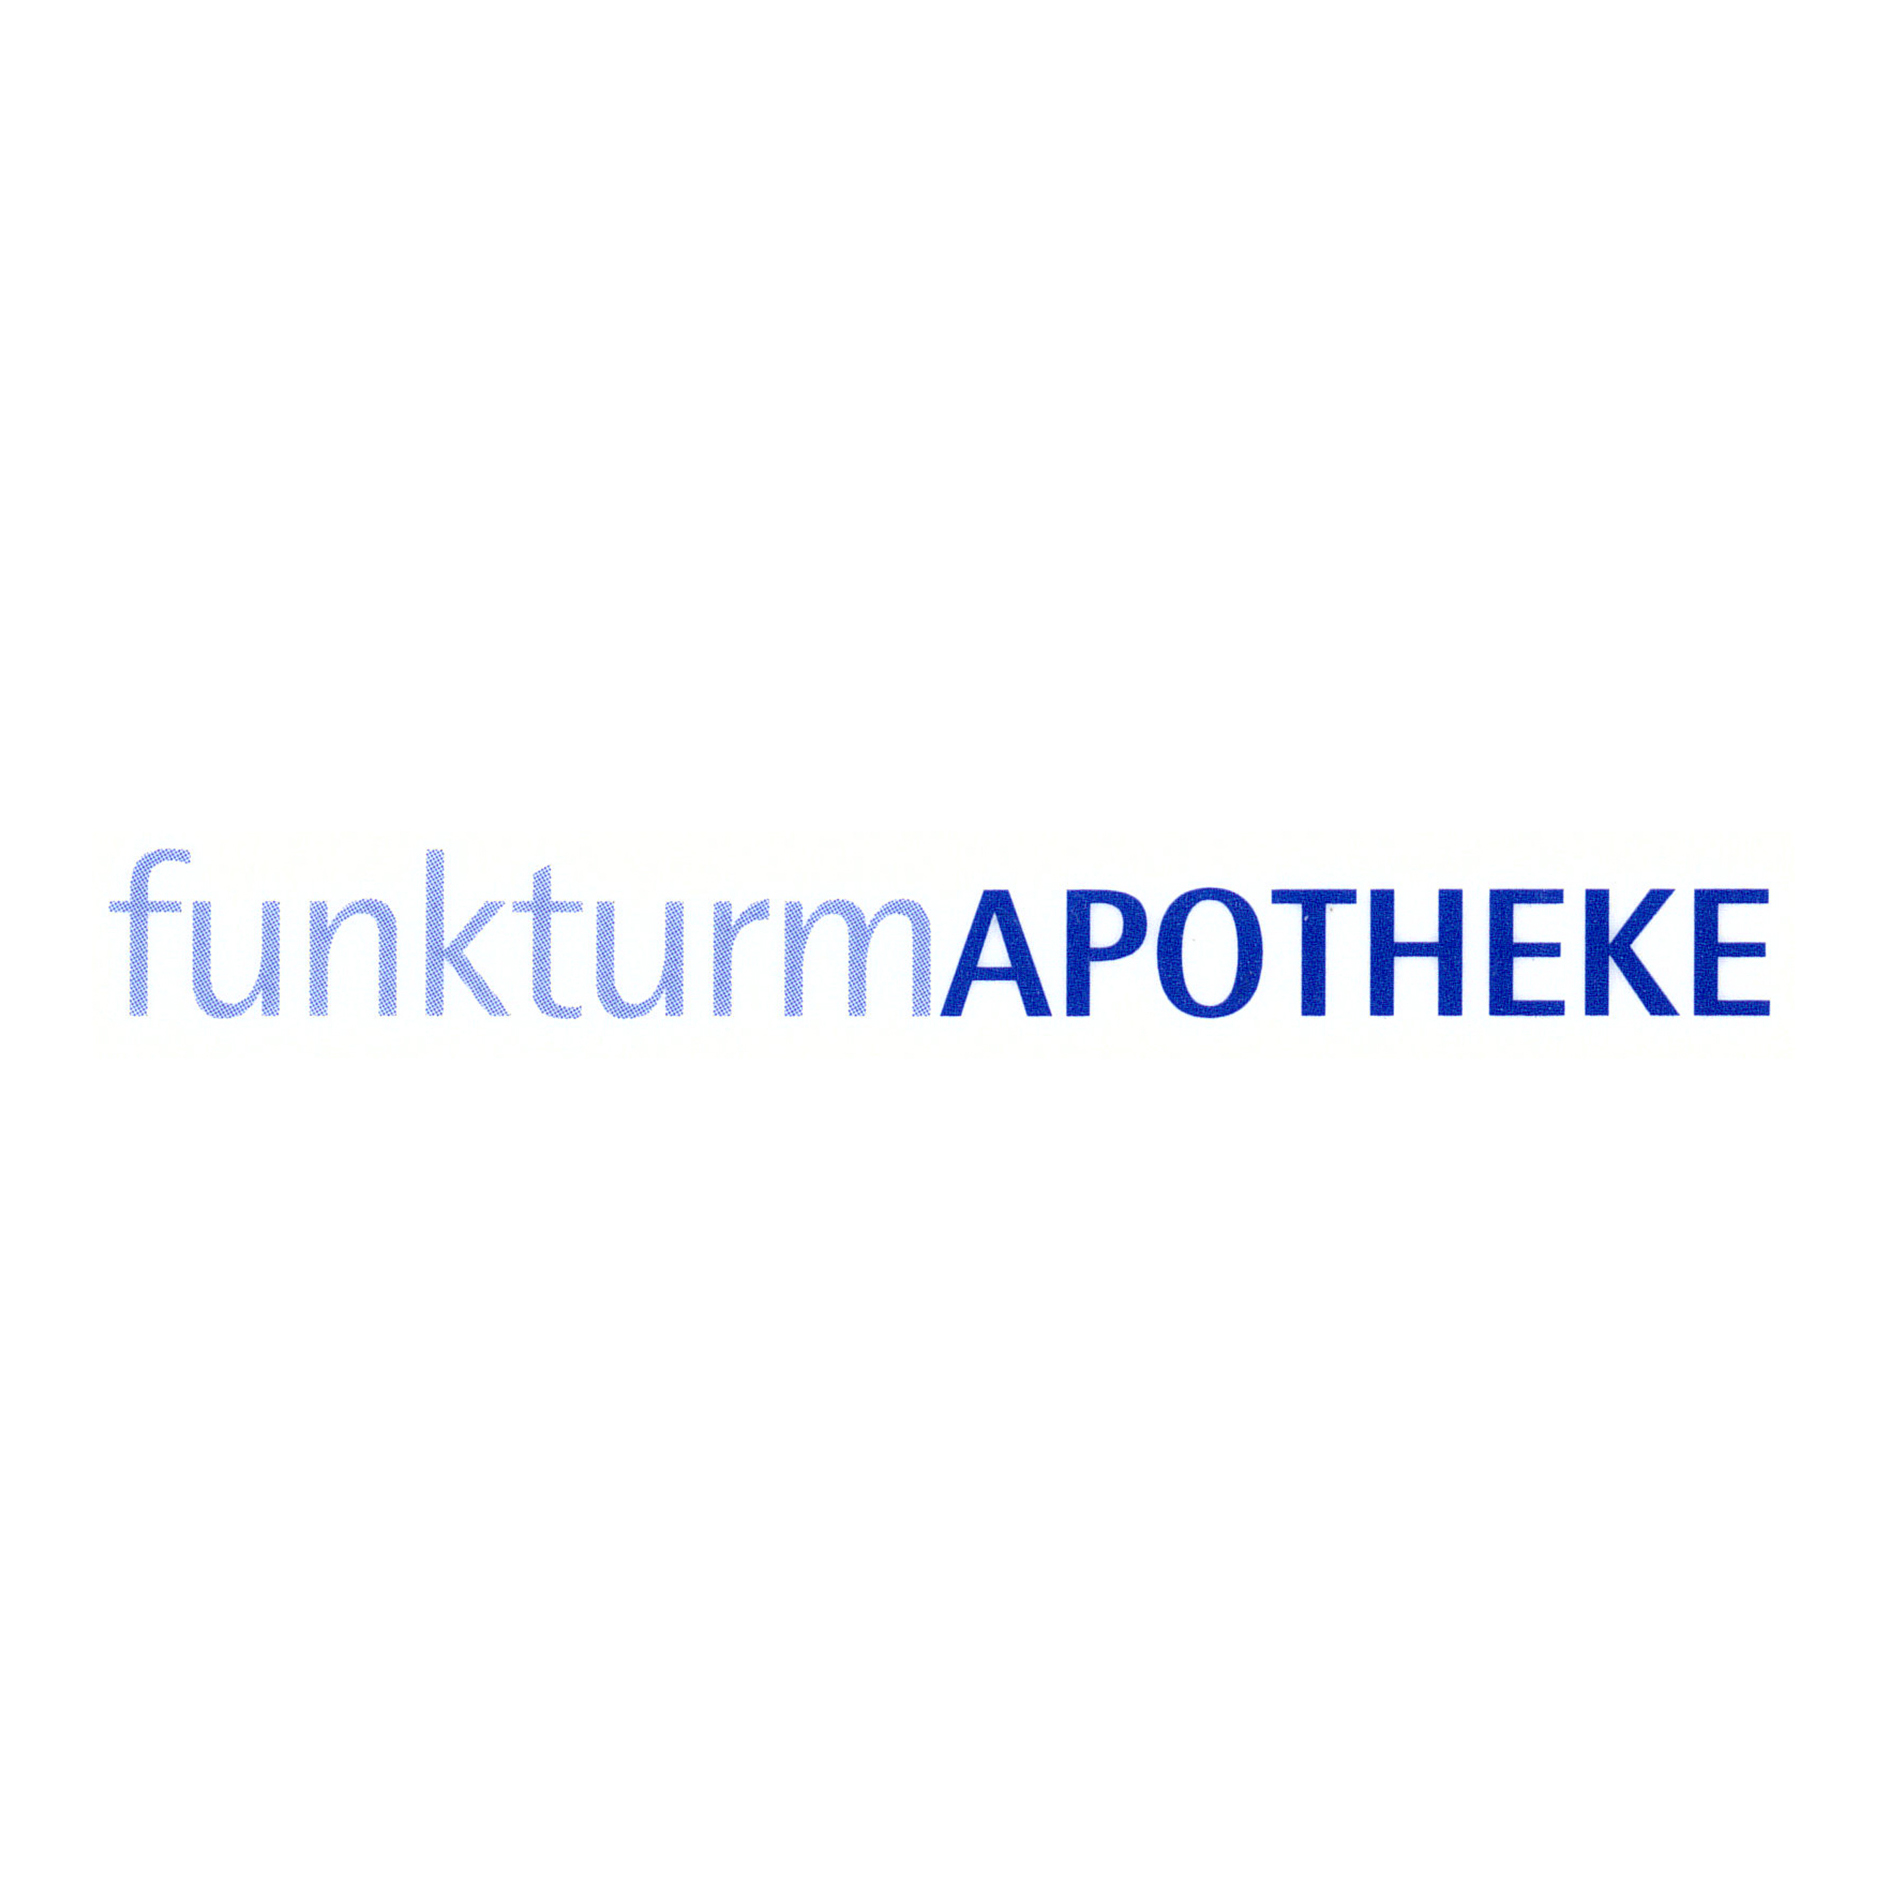 Funkturm-Apotheke in Dortmund - Logo